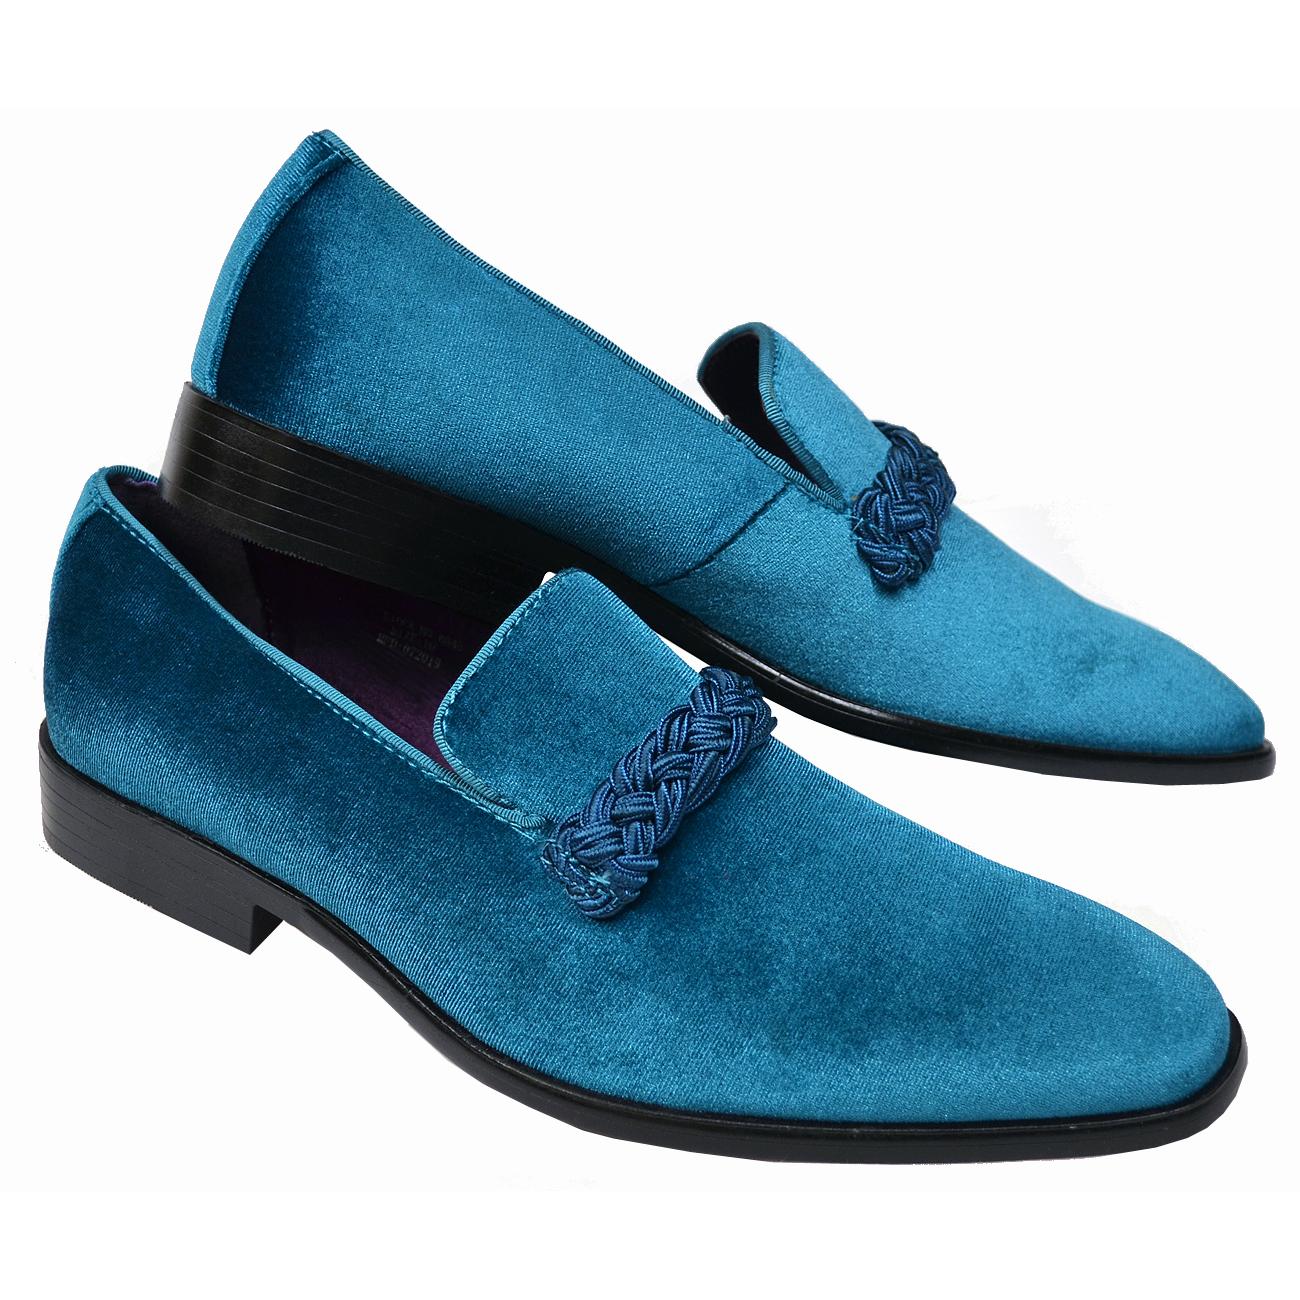 Antonio Cerrelli Turquoise Velvet Slip-On Loafers 6845 - $69.90 ...